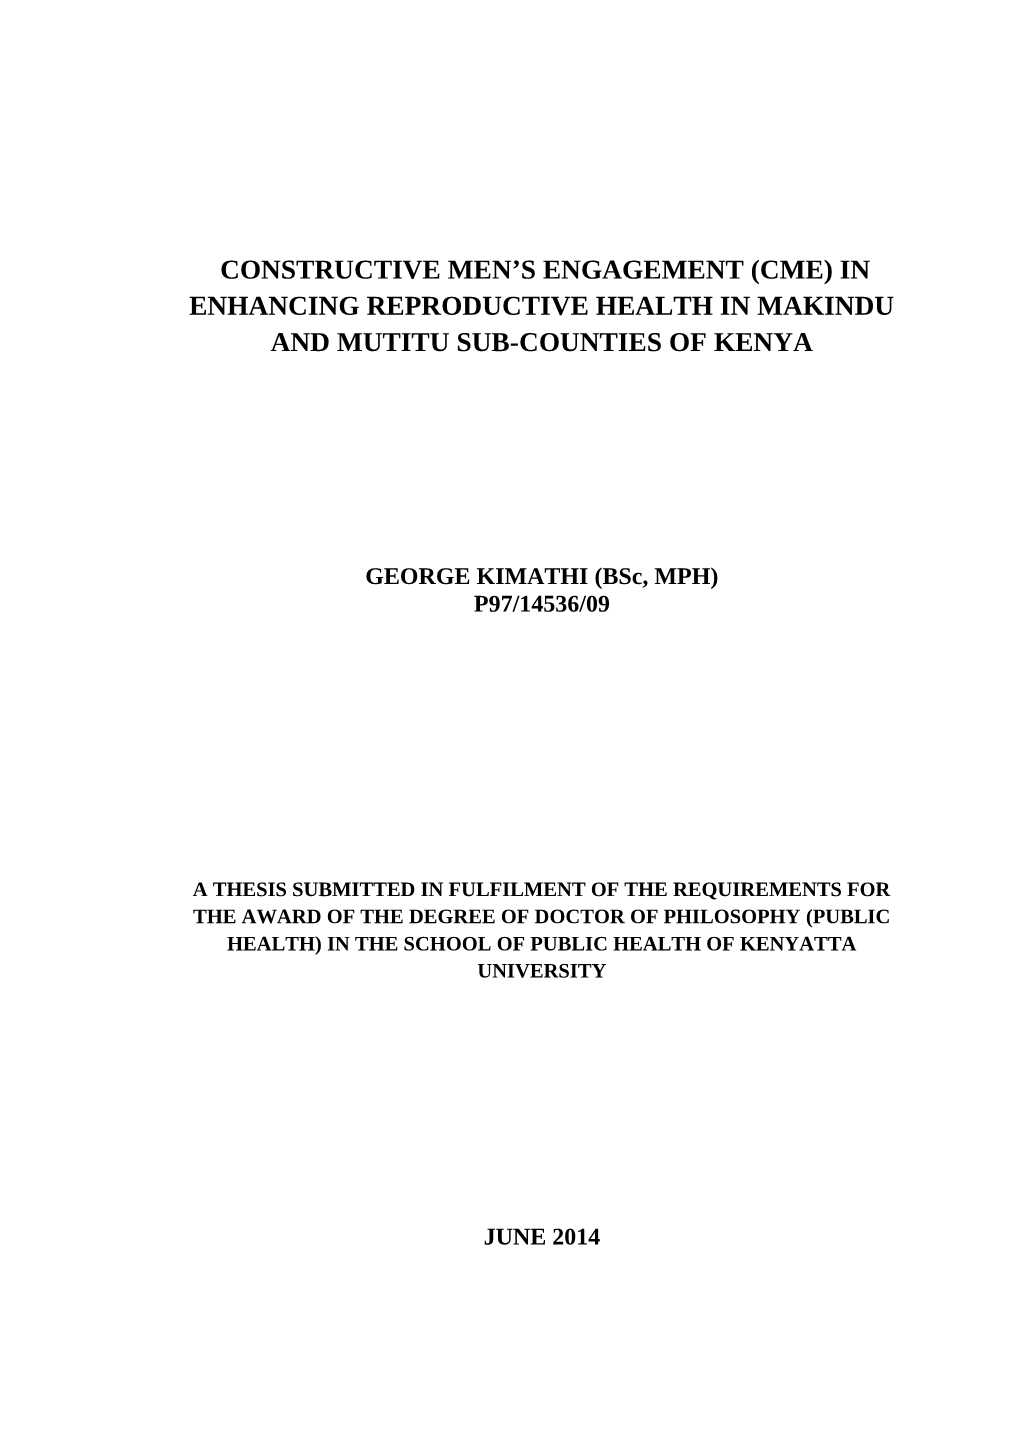 Constructive Men's Engagement (Cme) in Enhancing Reproductive Health in Makindu and Mutitu Sub-Counties of Kenya